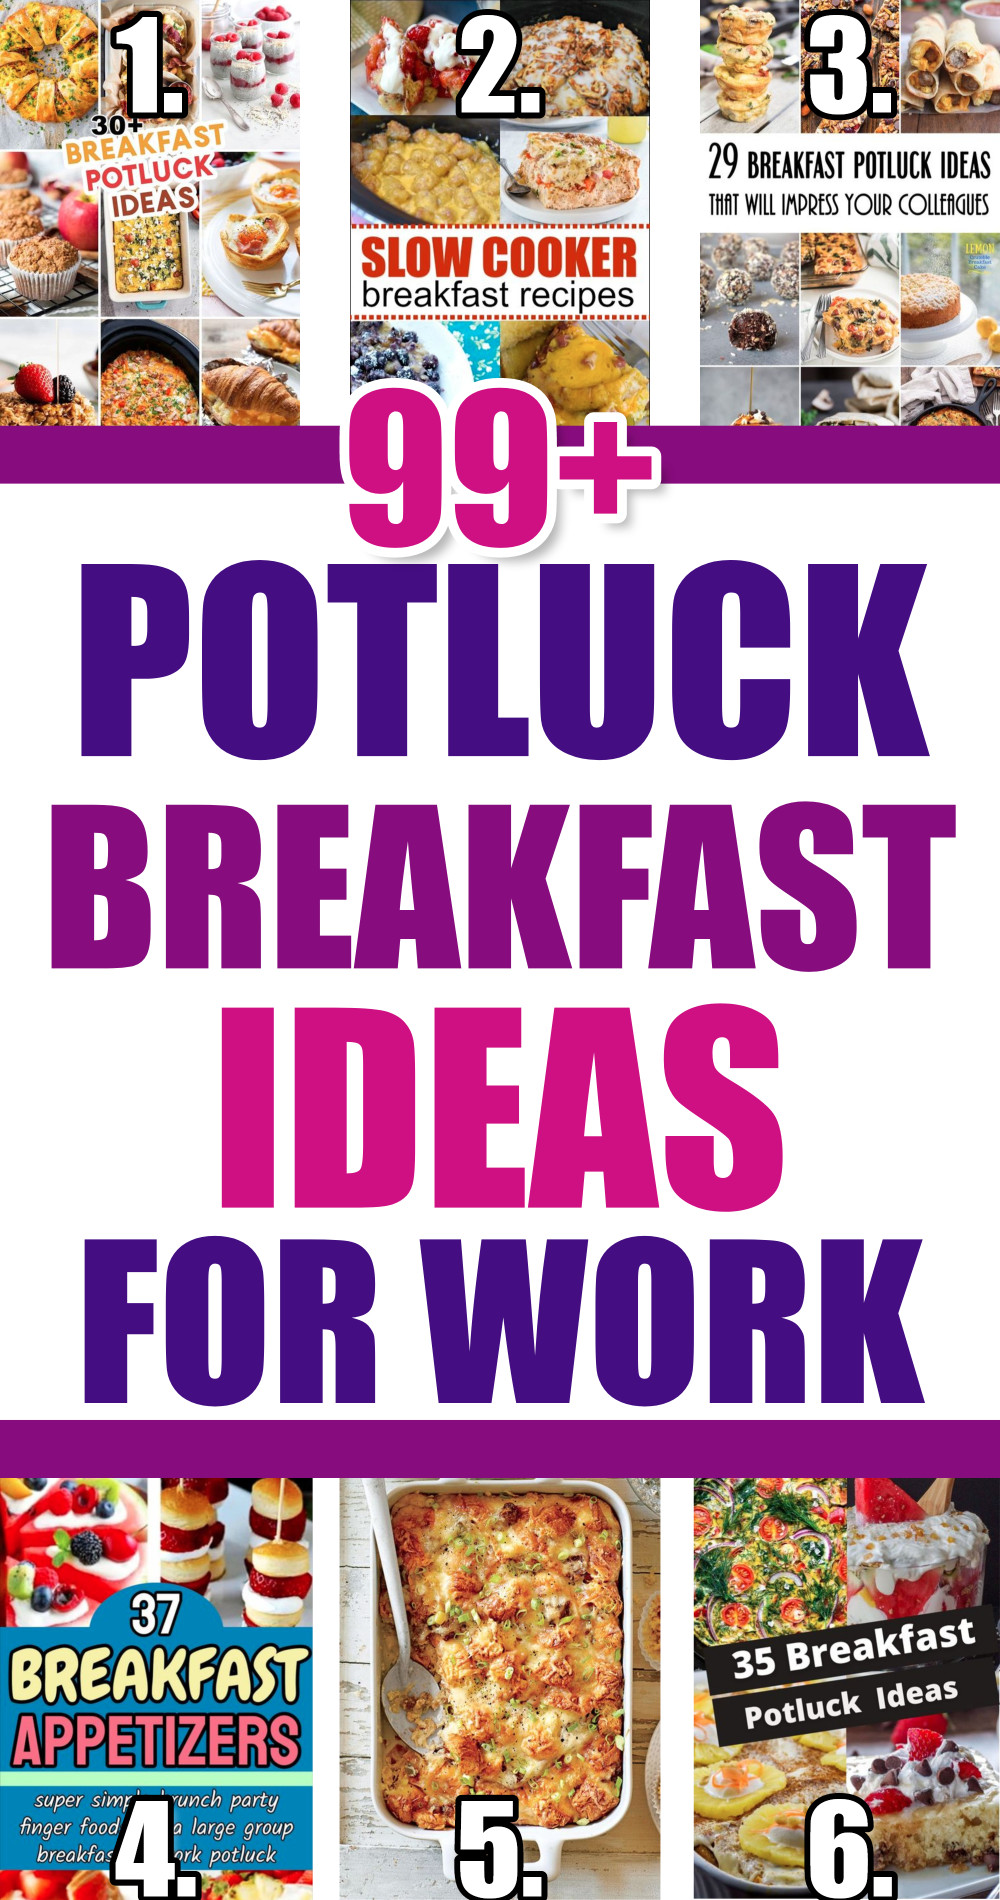 potluck breakfast ideas for work